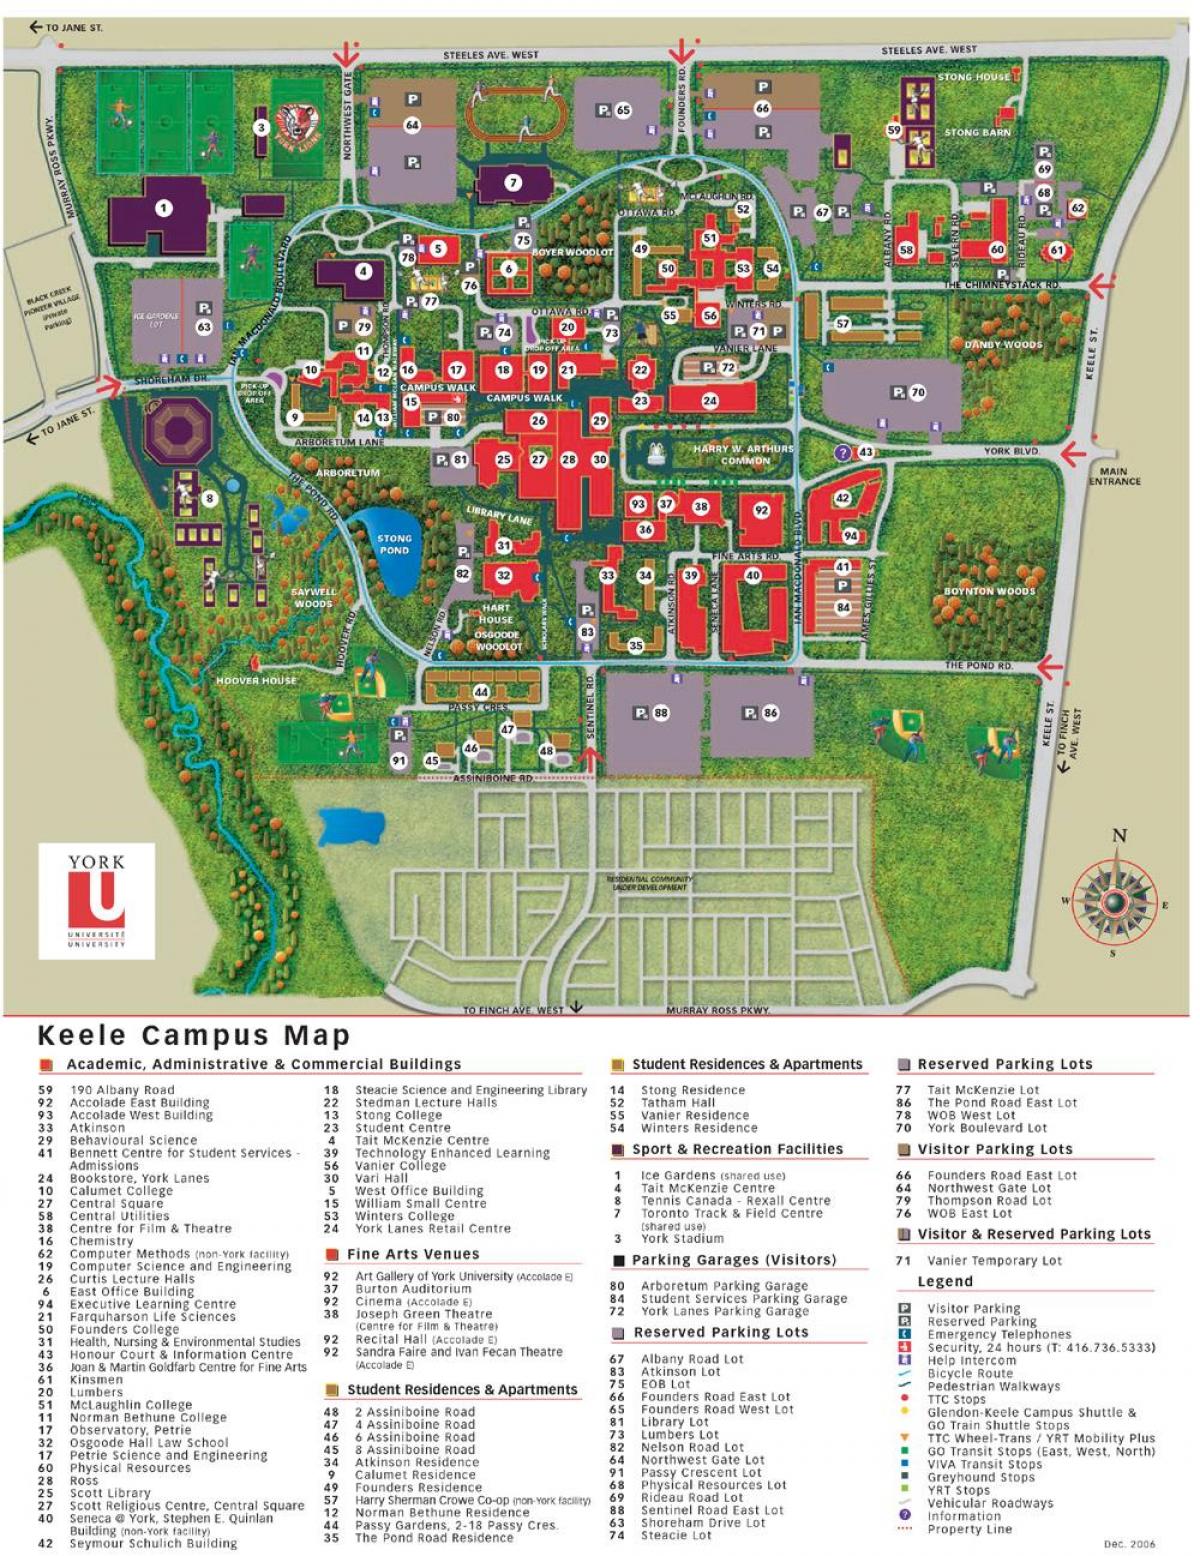 Карта на Јорк универзитетот keele кампус